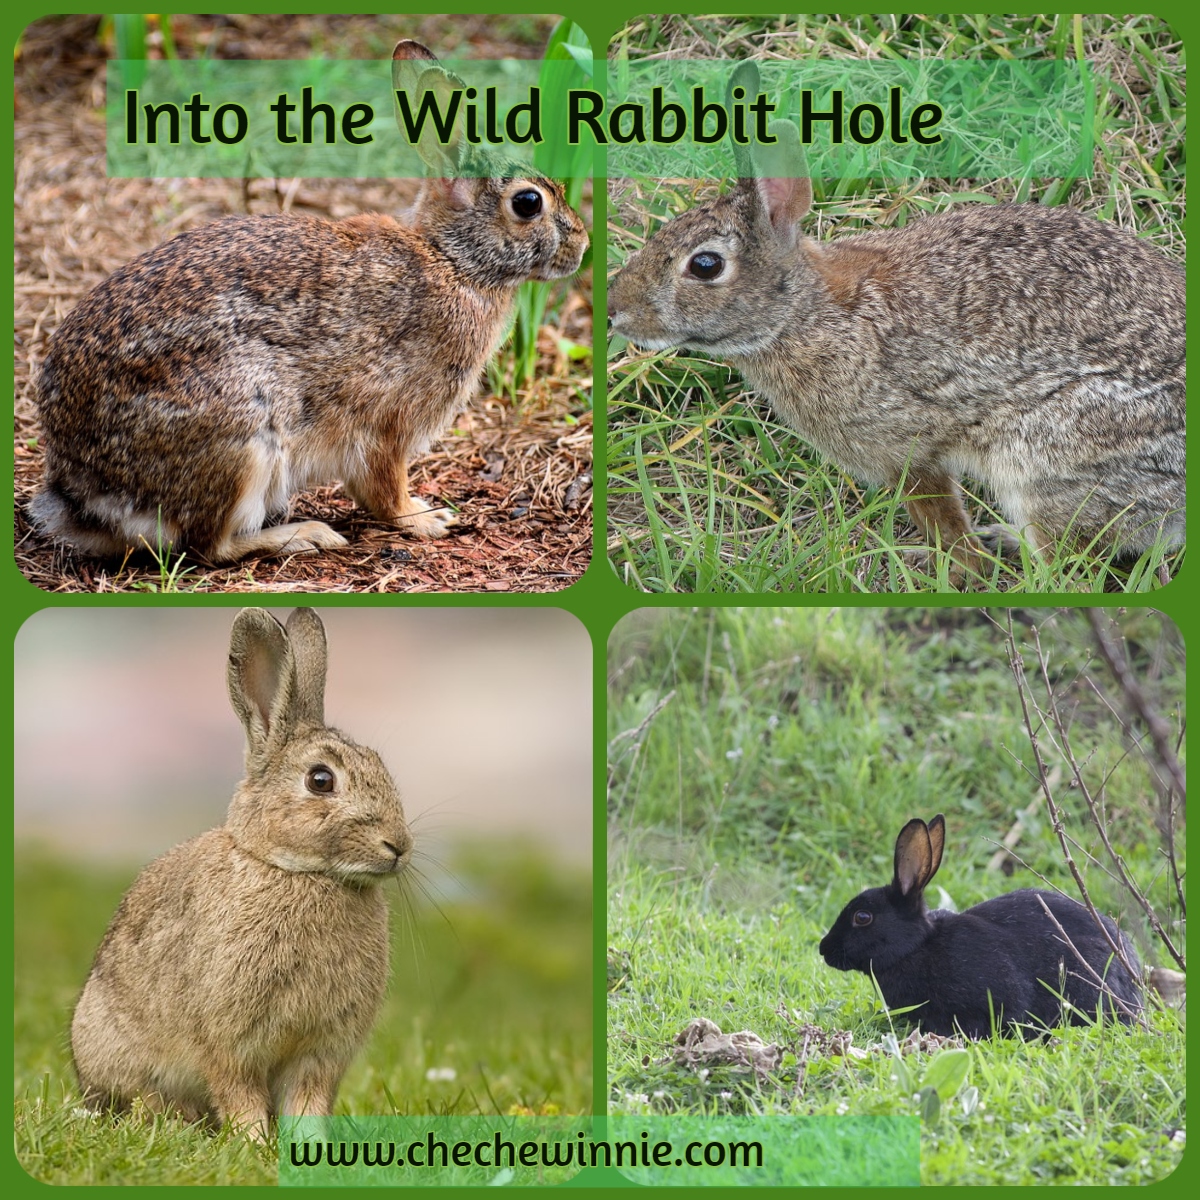 Into the Wild Rabbit Hole